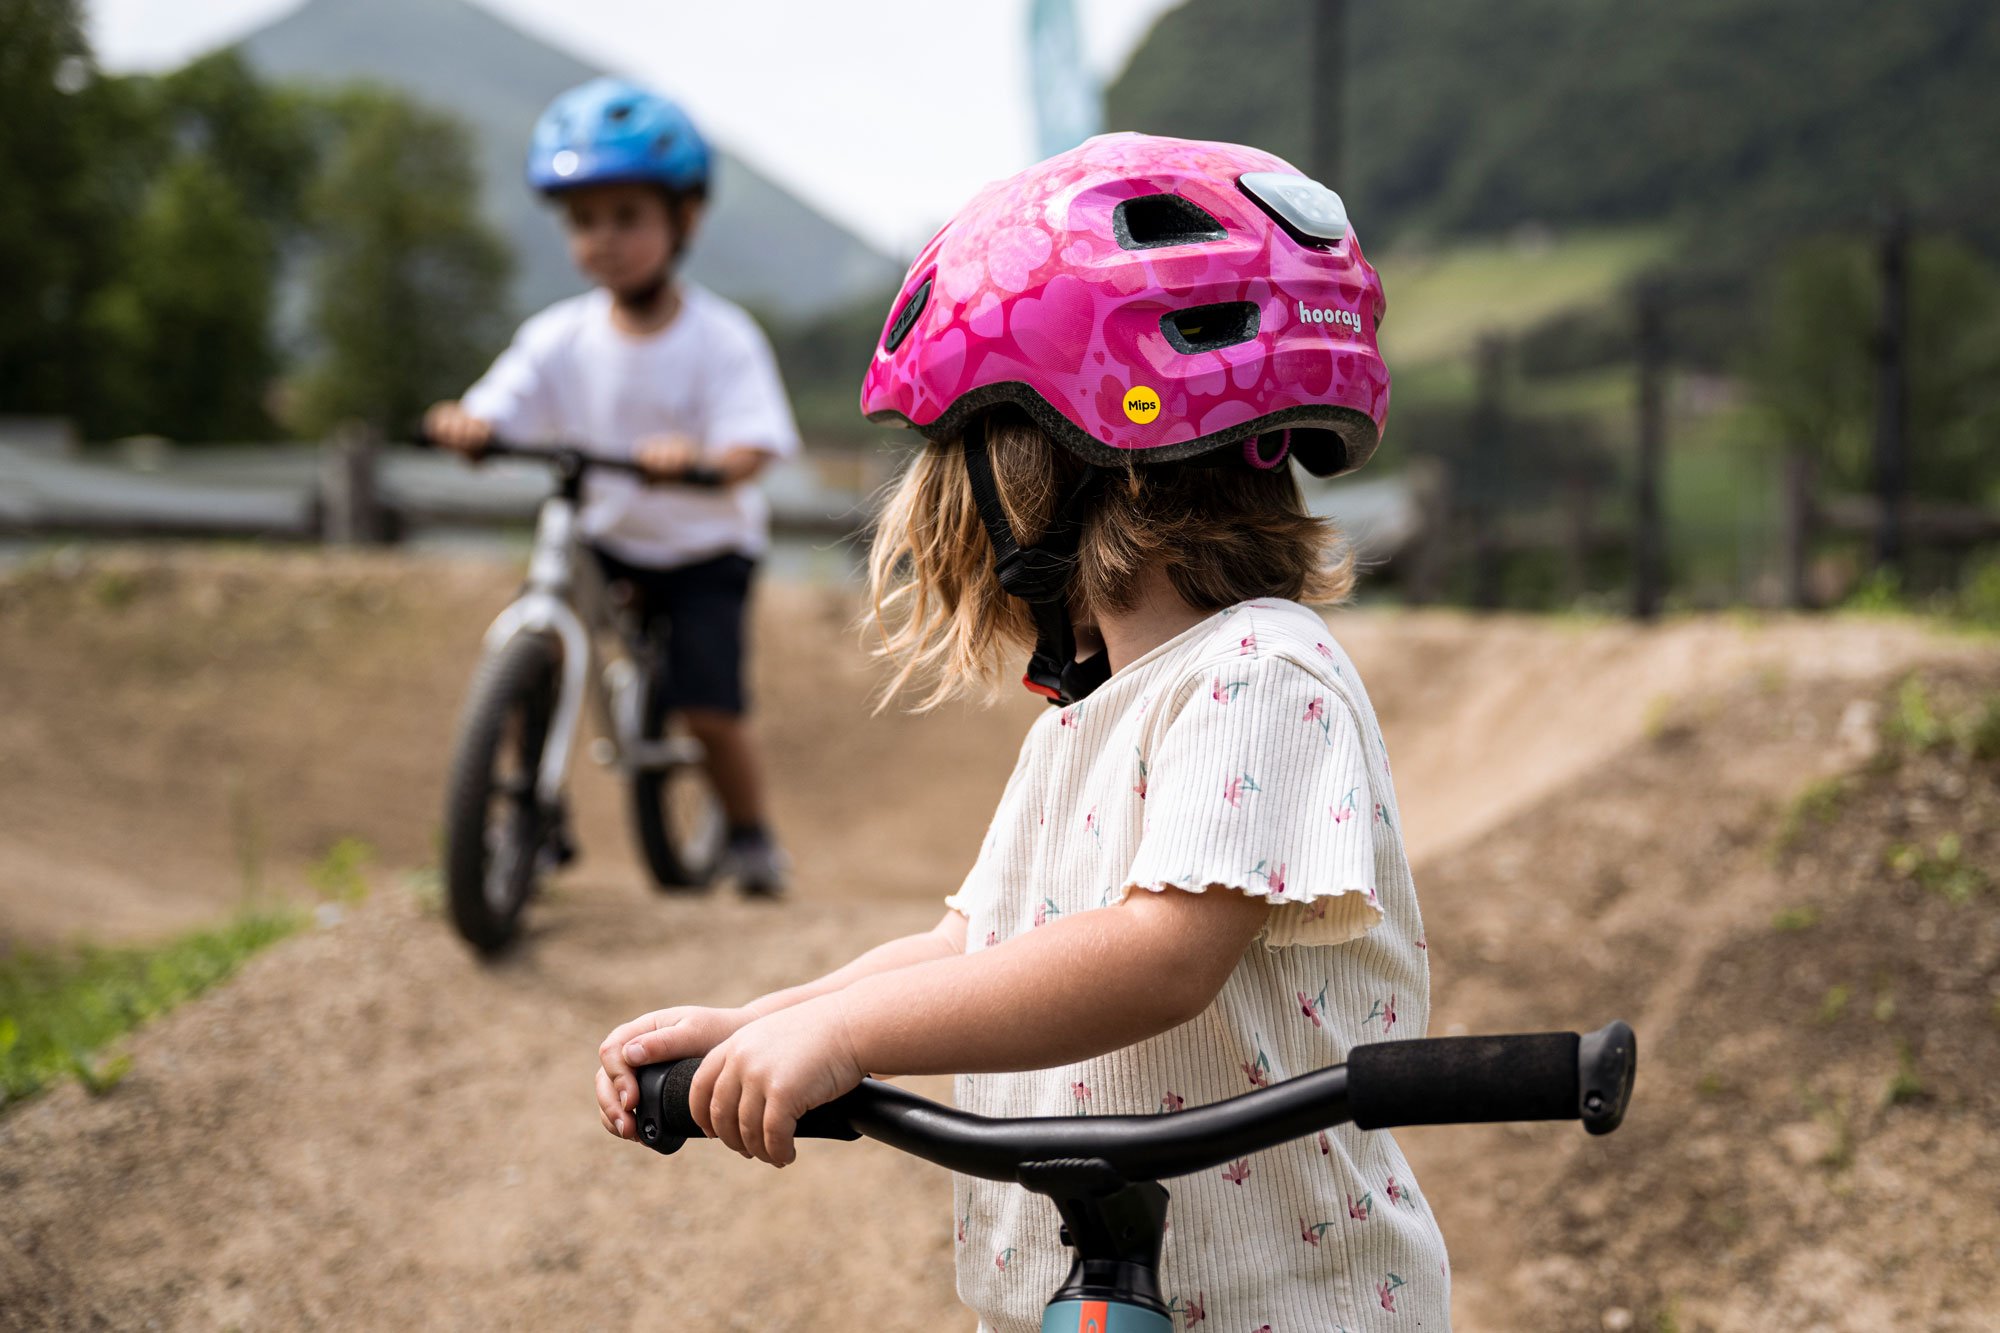 MET Hooray Kids helmet with Integrated Rear Led Light